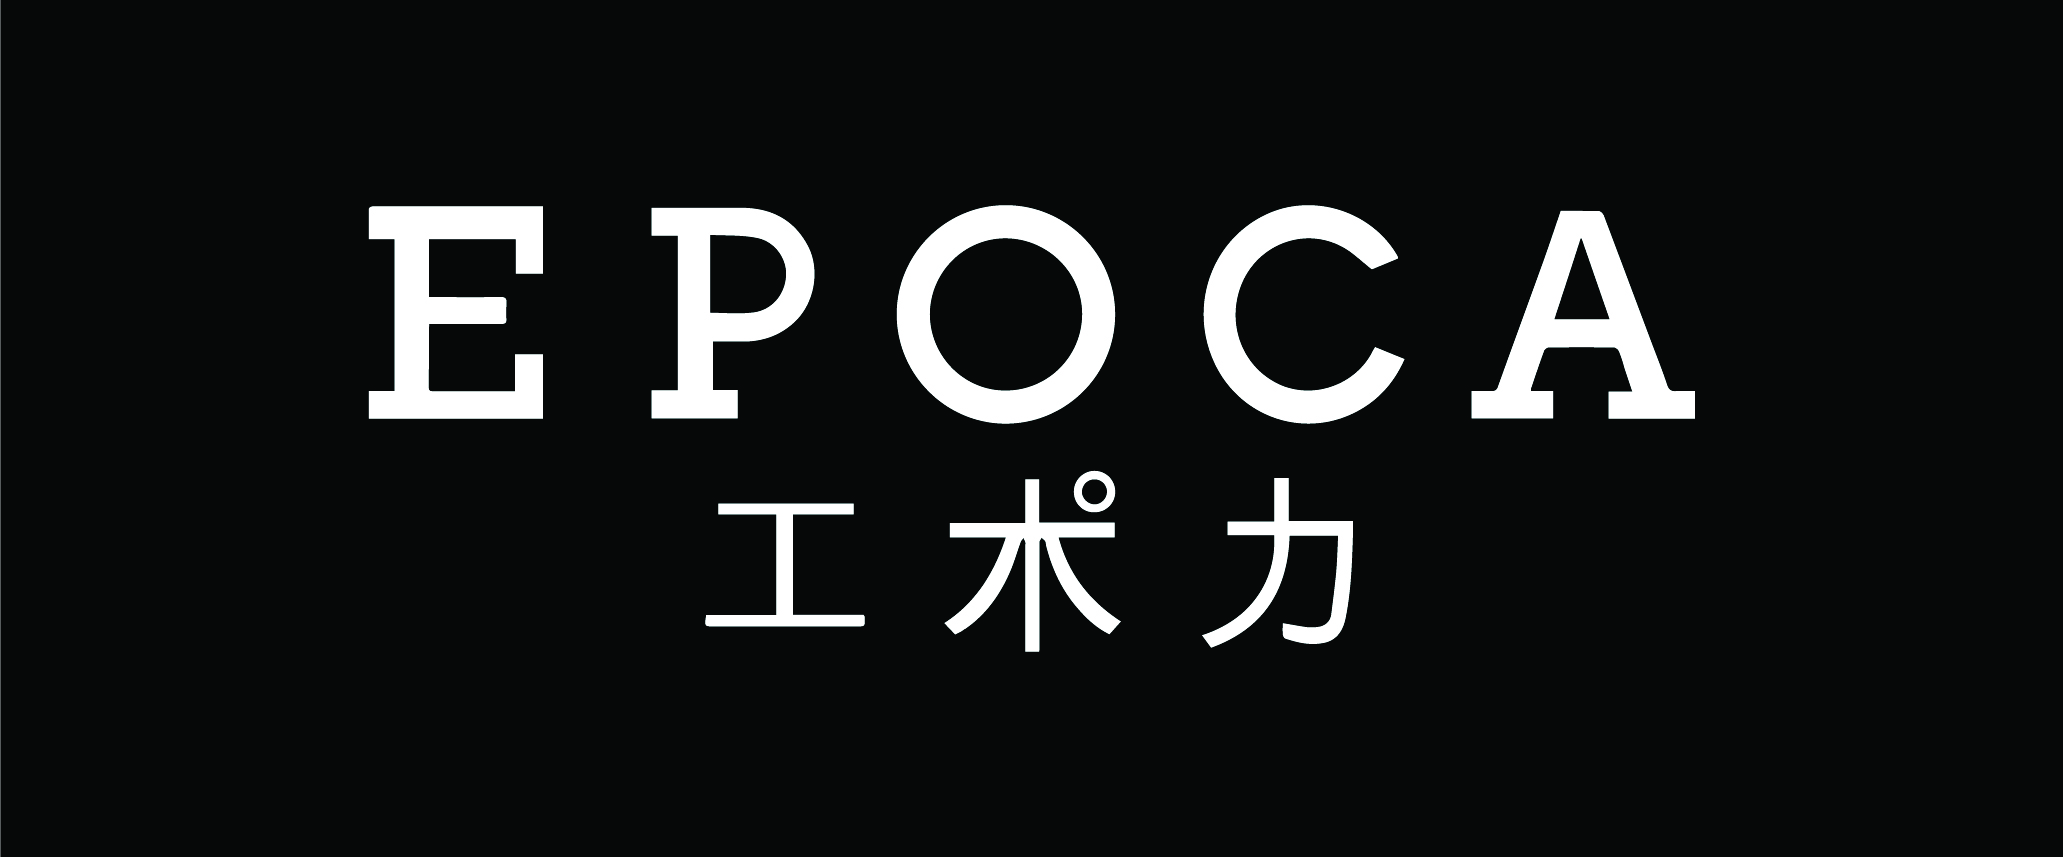 Epoca Logo for website top bar.jpg